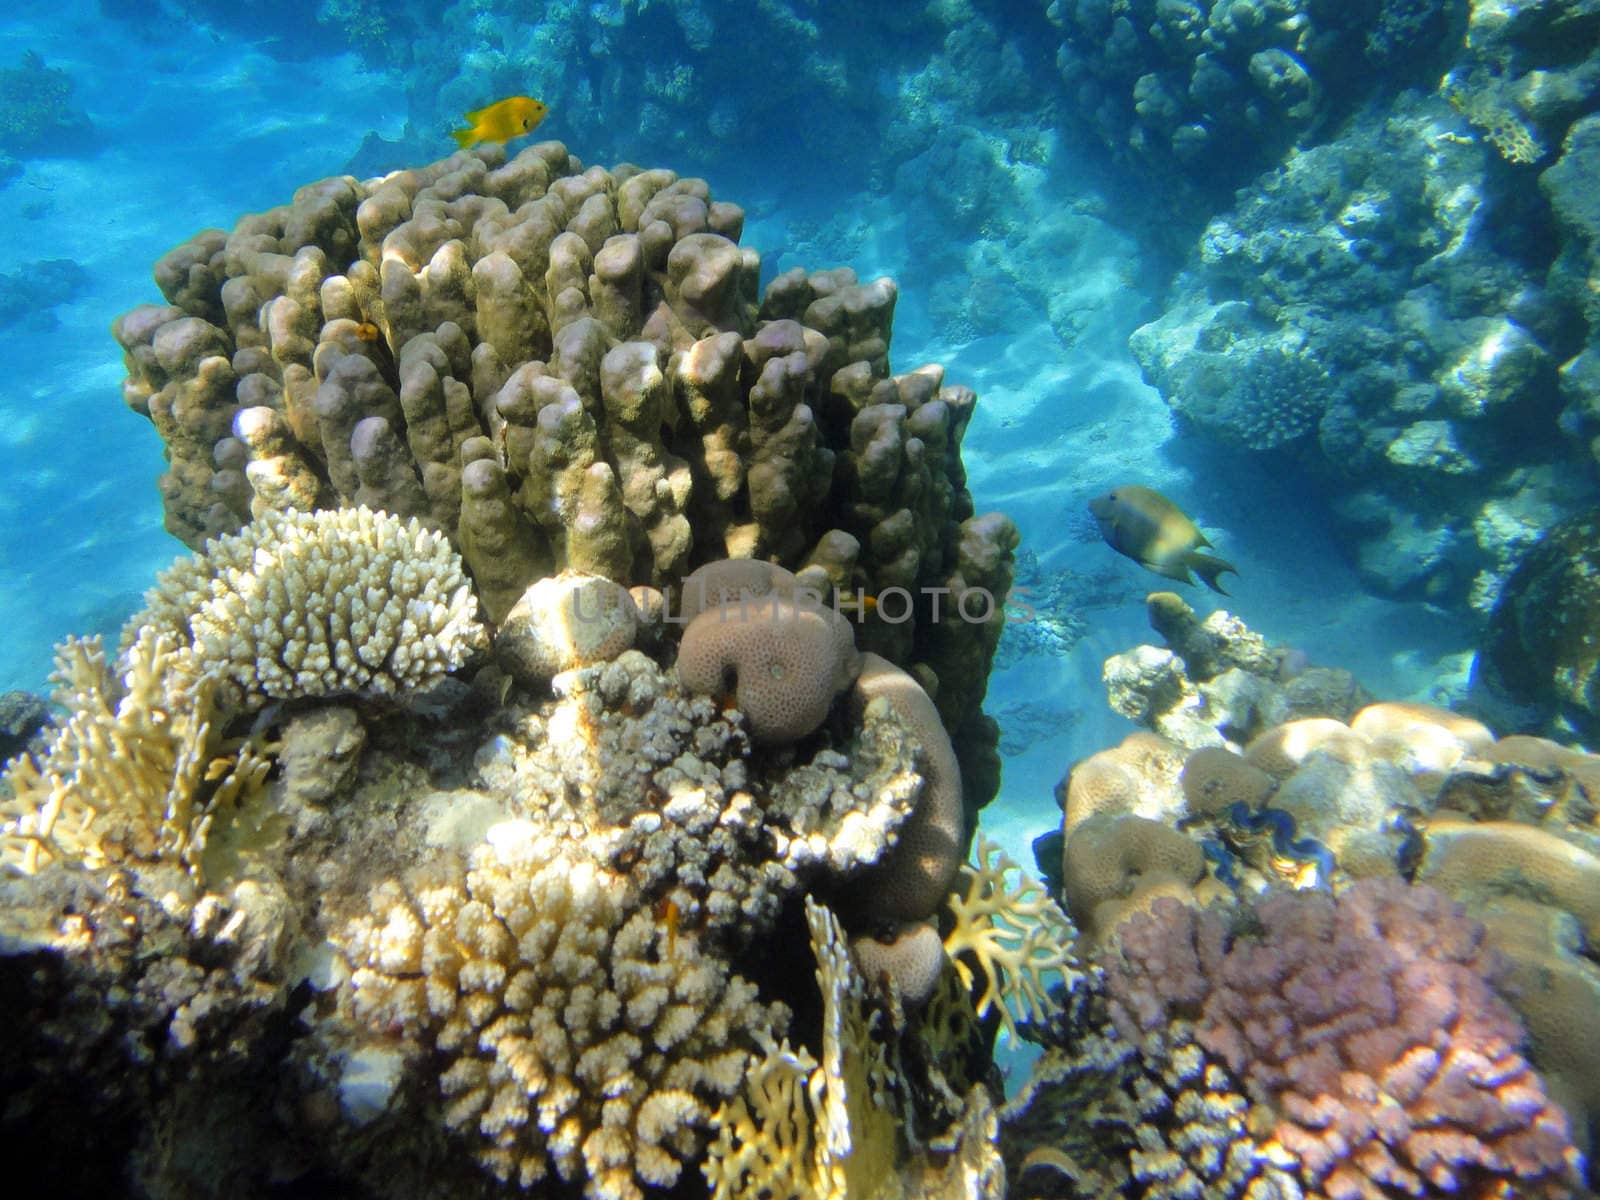 Underwater scene, rest on the Red sea, Egypt, Sharm El Sheikh